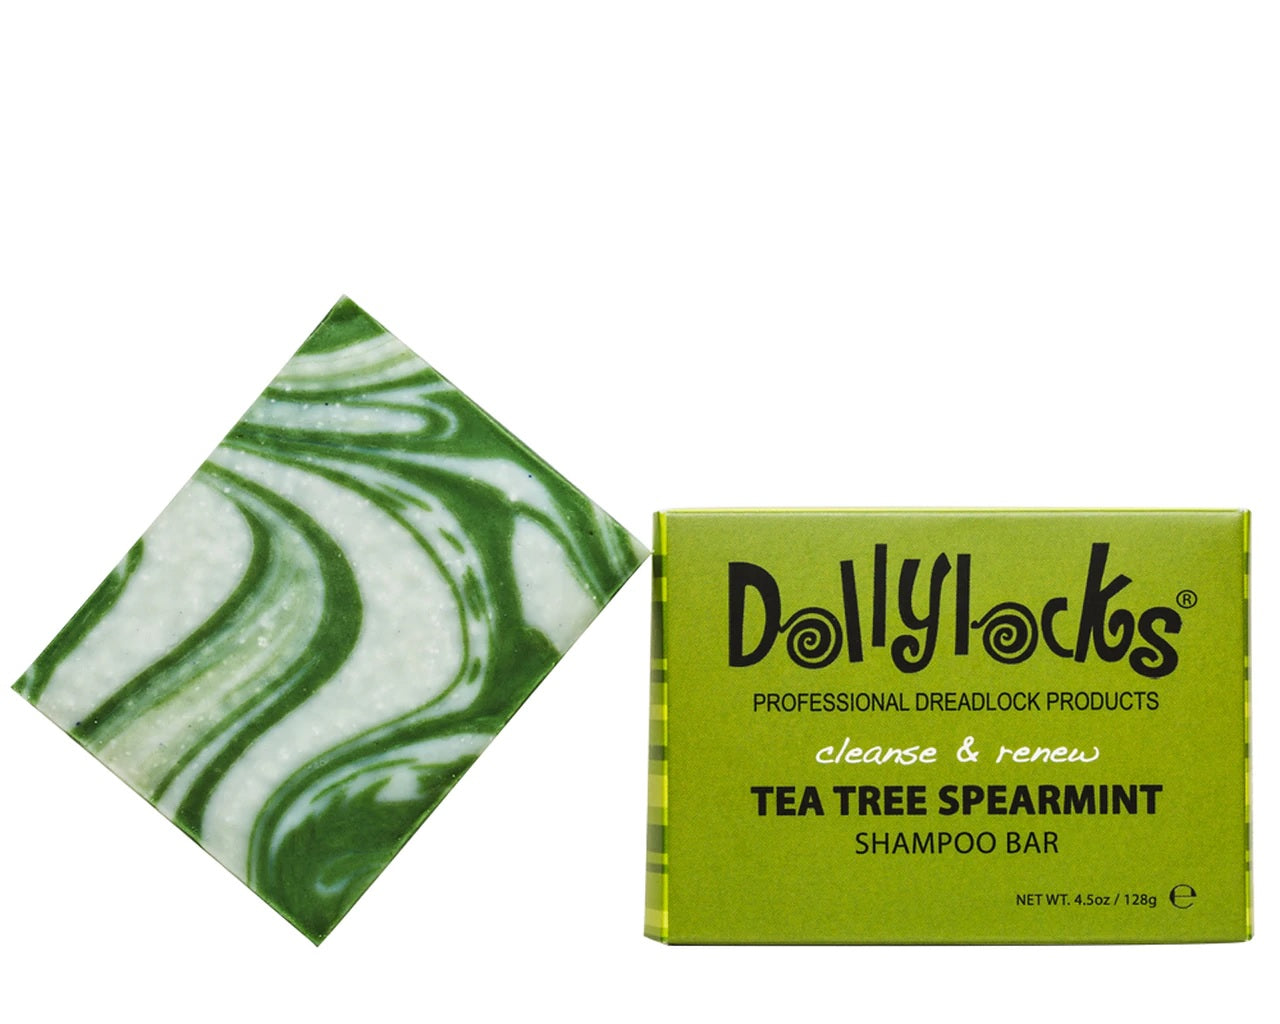 Dollylocks - Dreadlocks Shampoo-Bar - Tea Tree Spearmint (4.5oz/127g)